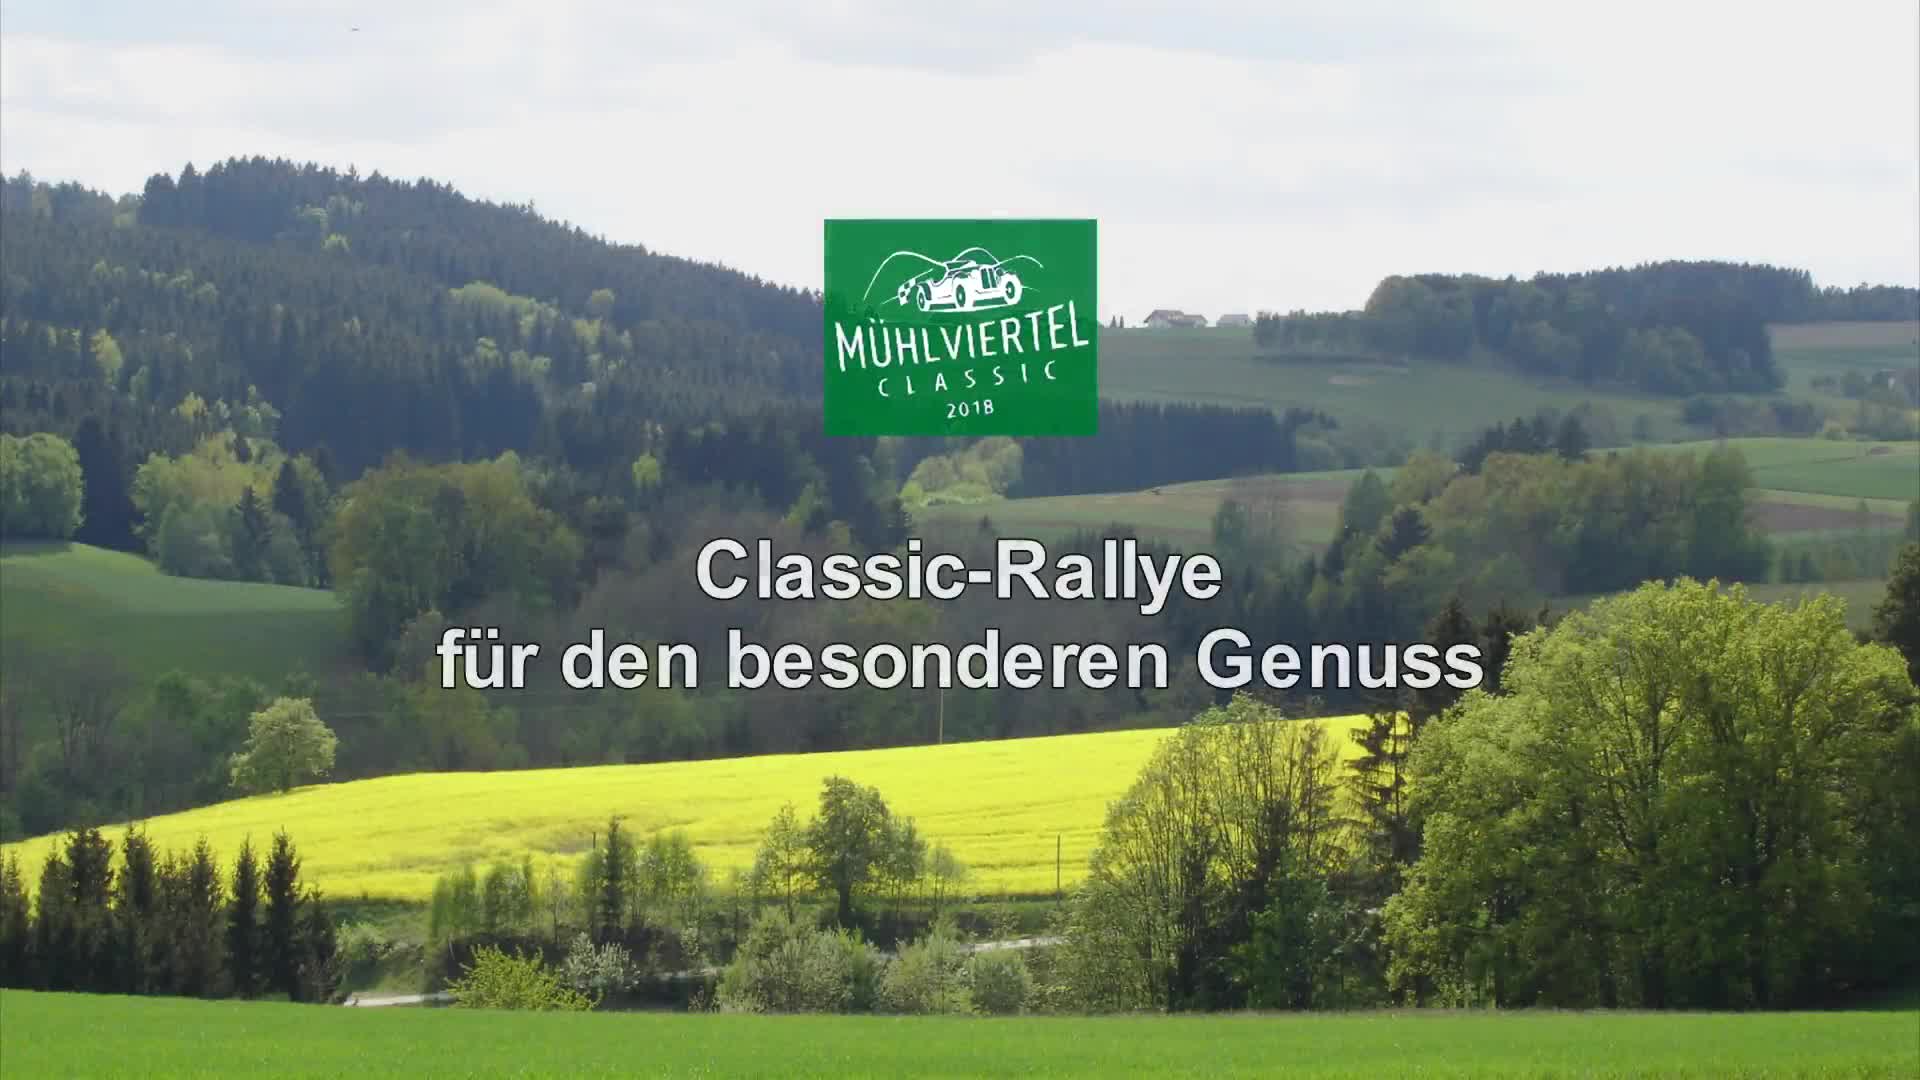 Mühlviertel Classic Rallye 2018